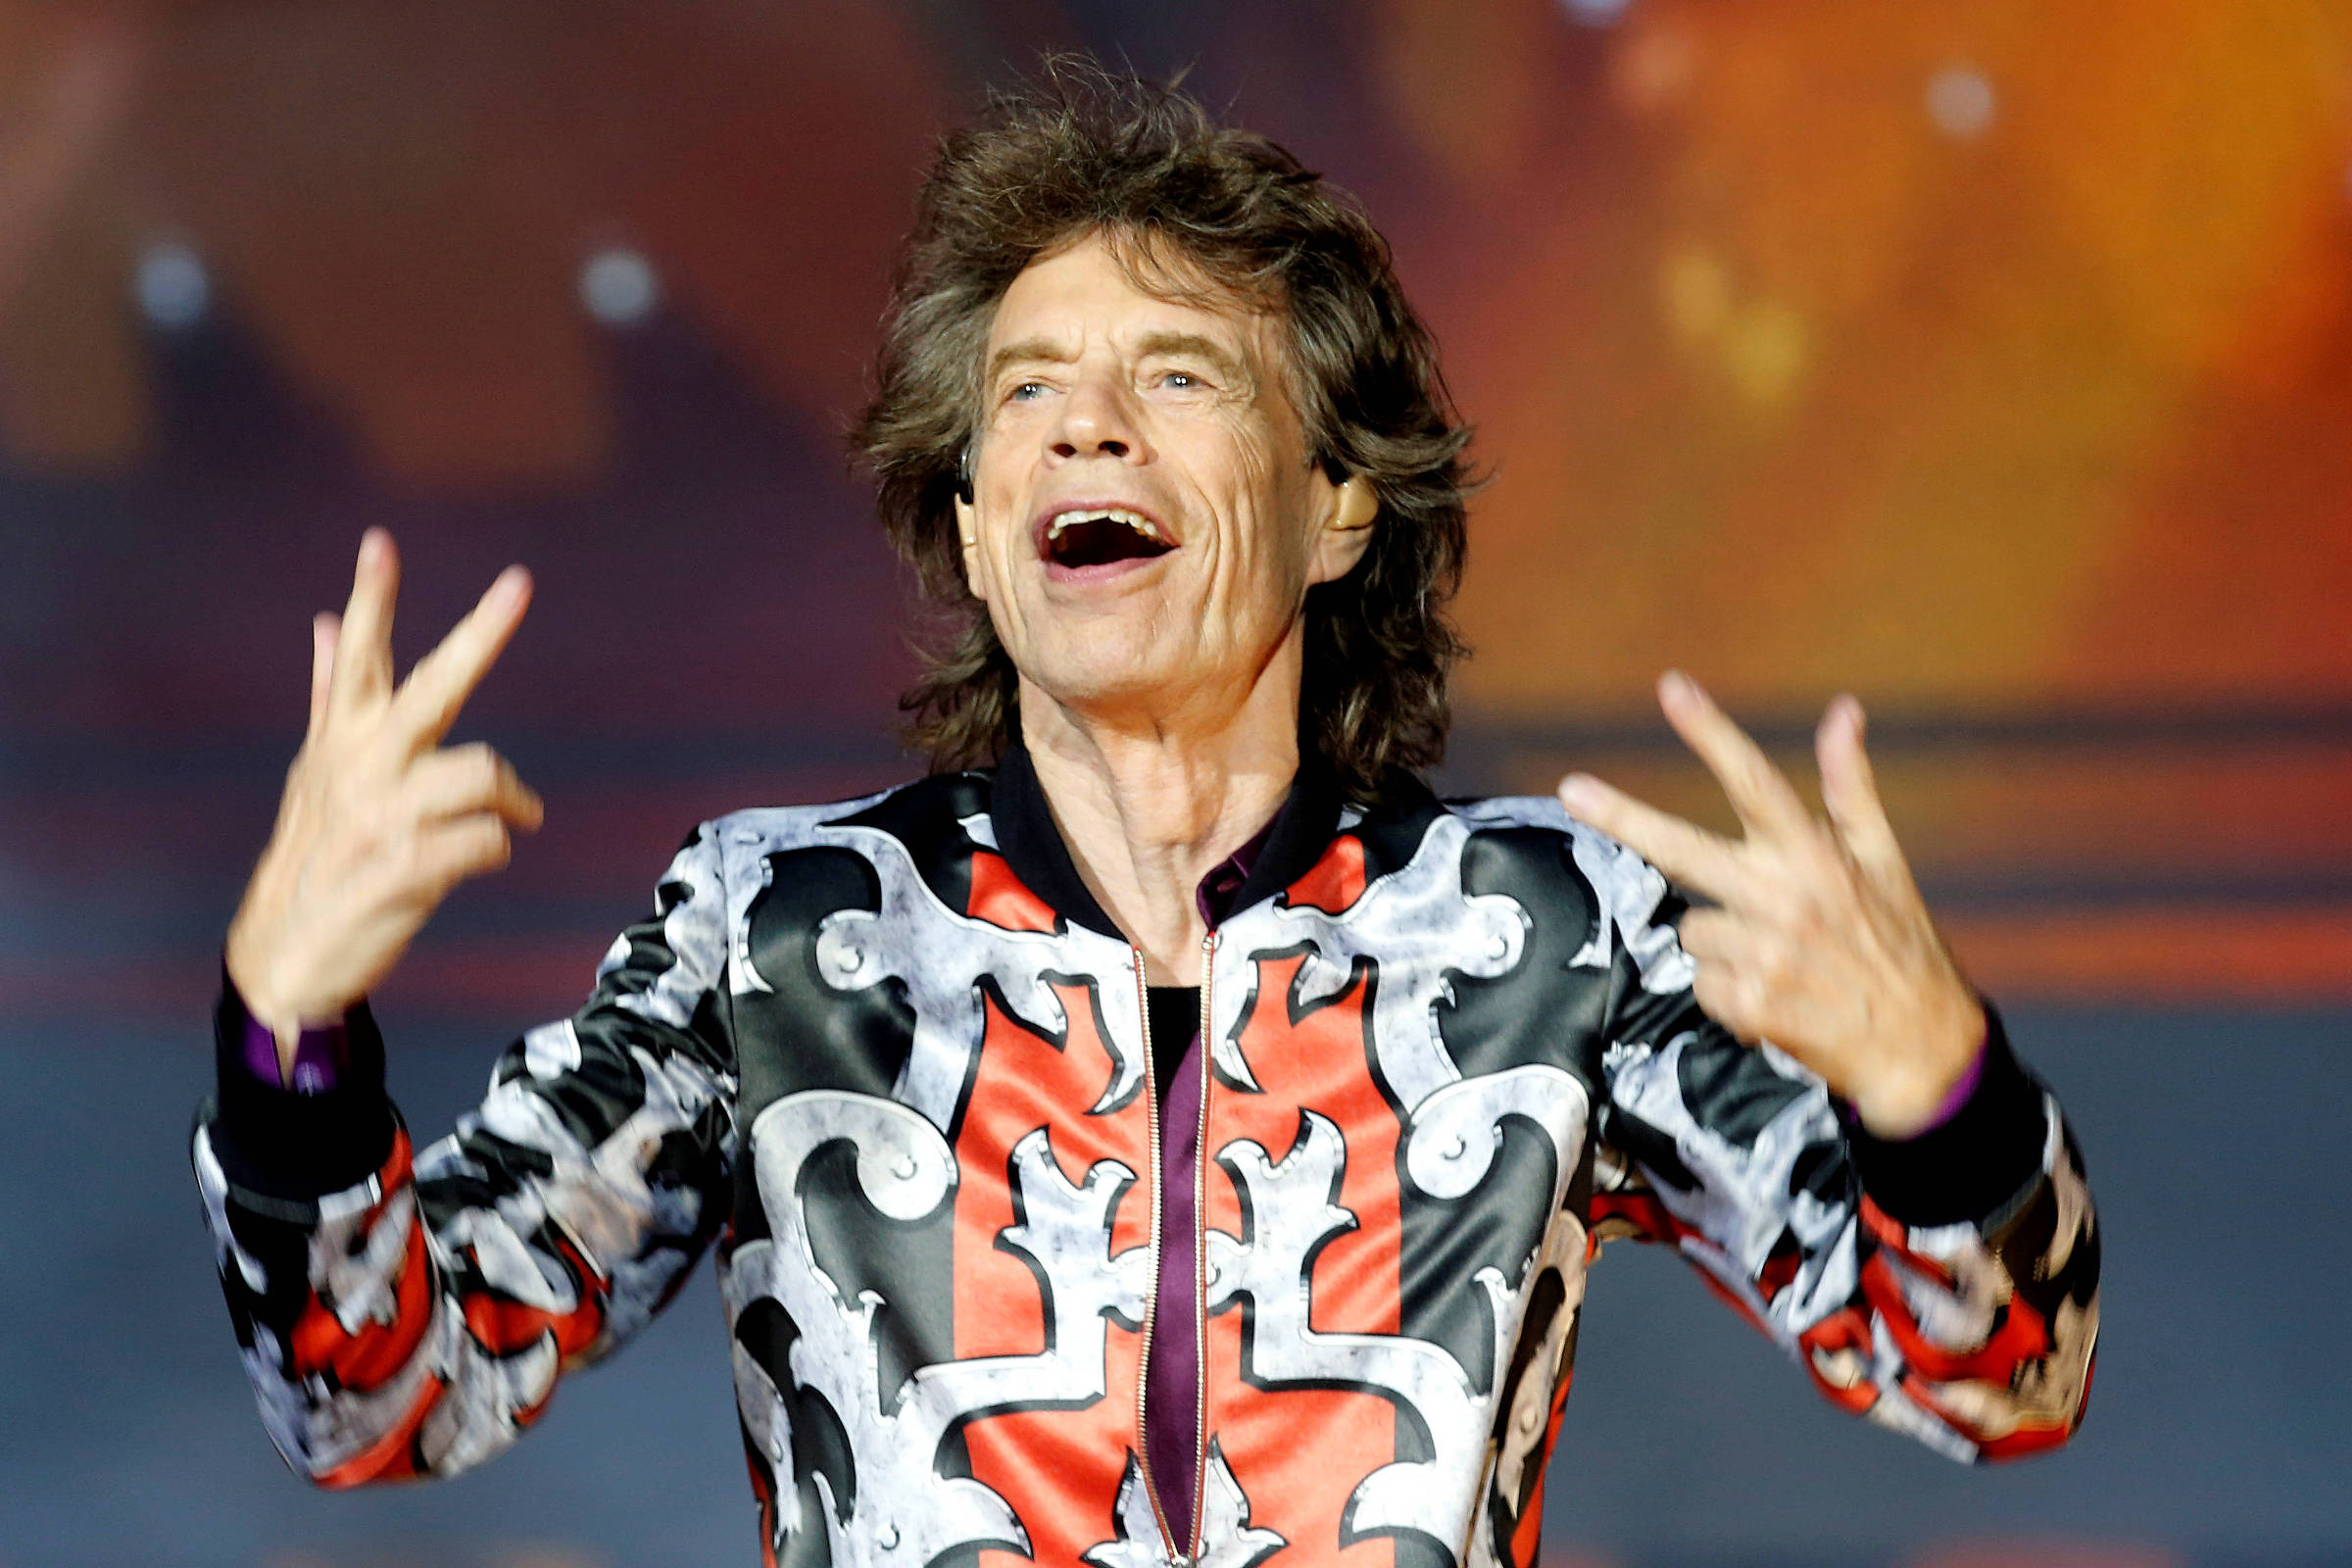 F5 Música Mick Jagger passará por cirurgia cardíaca após Rolling